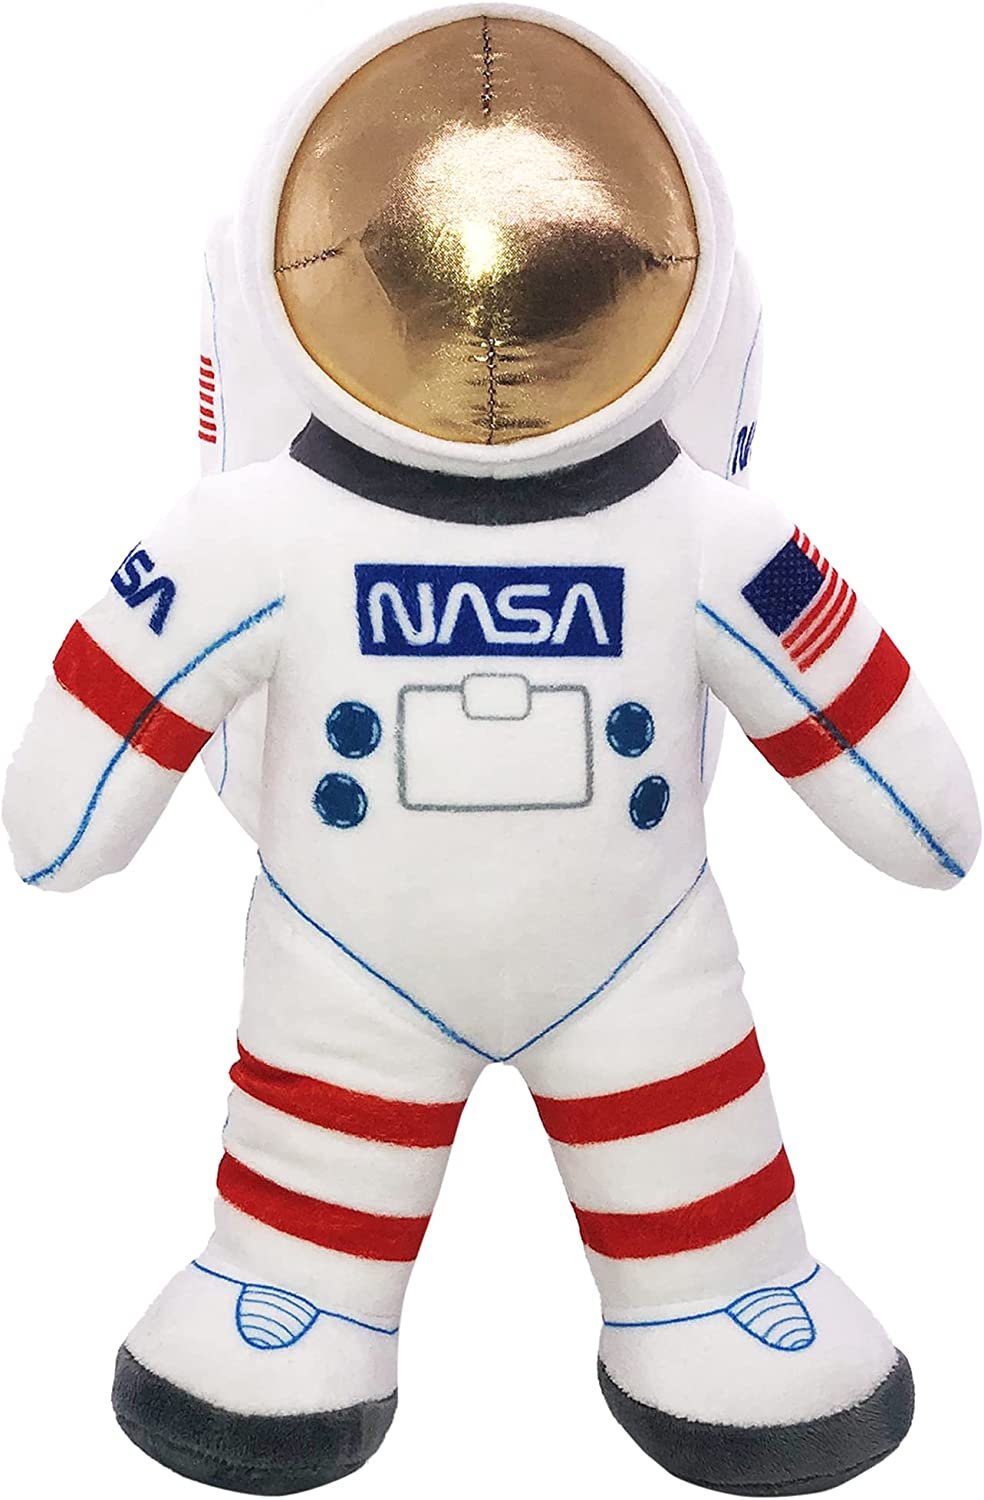 12” Plush Astronaut Figurine, Stuffed Space Plushy for Kids